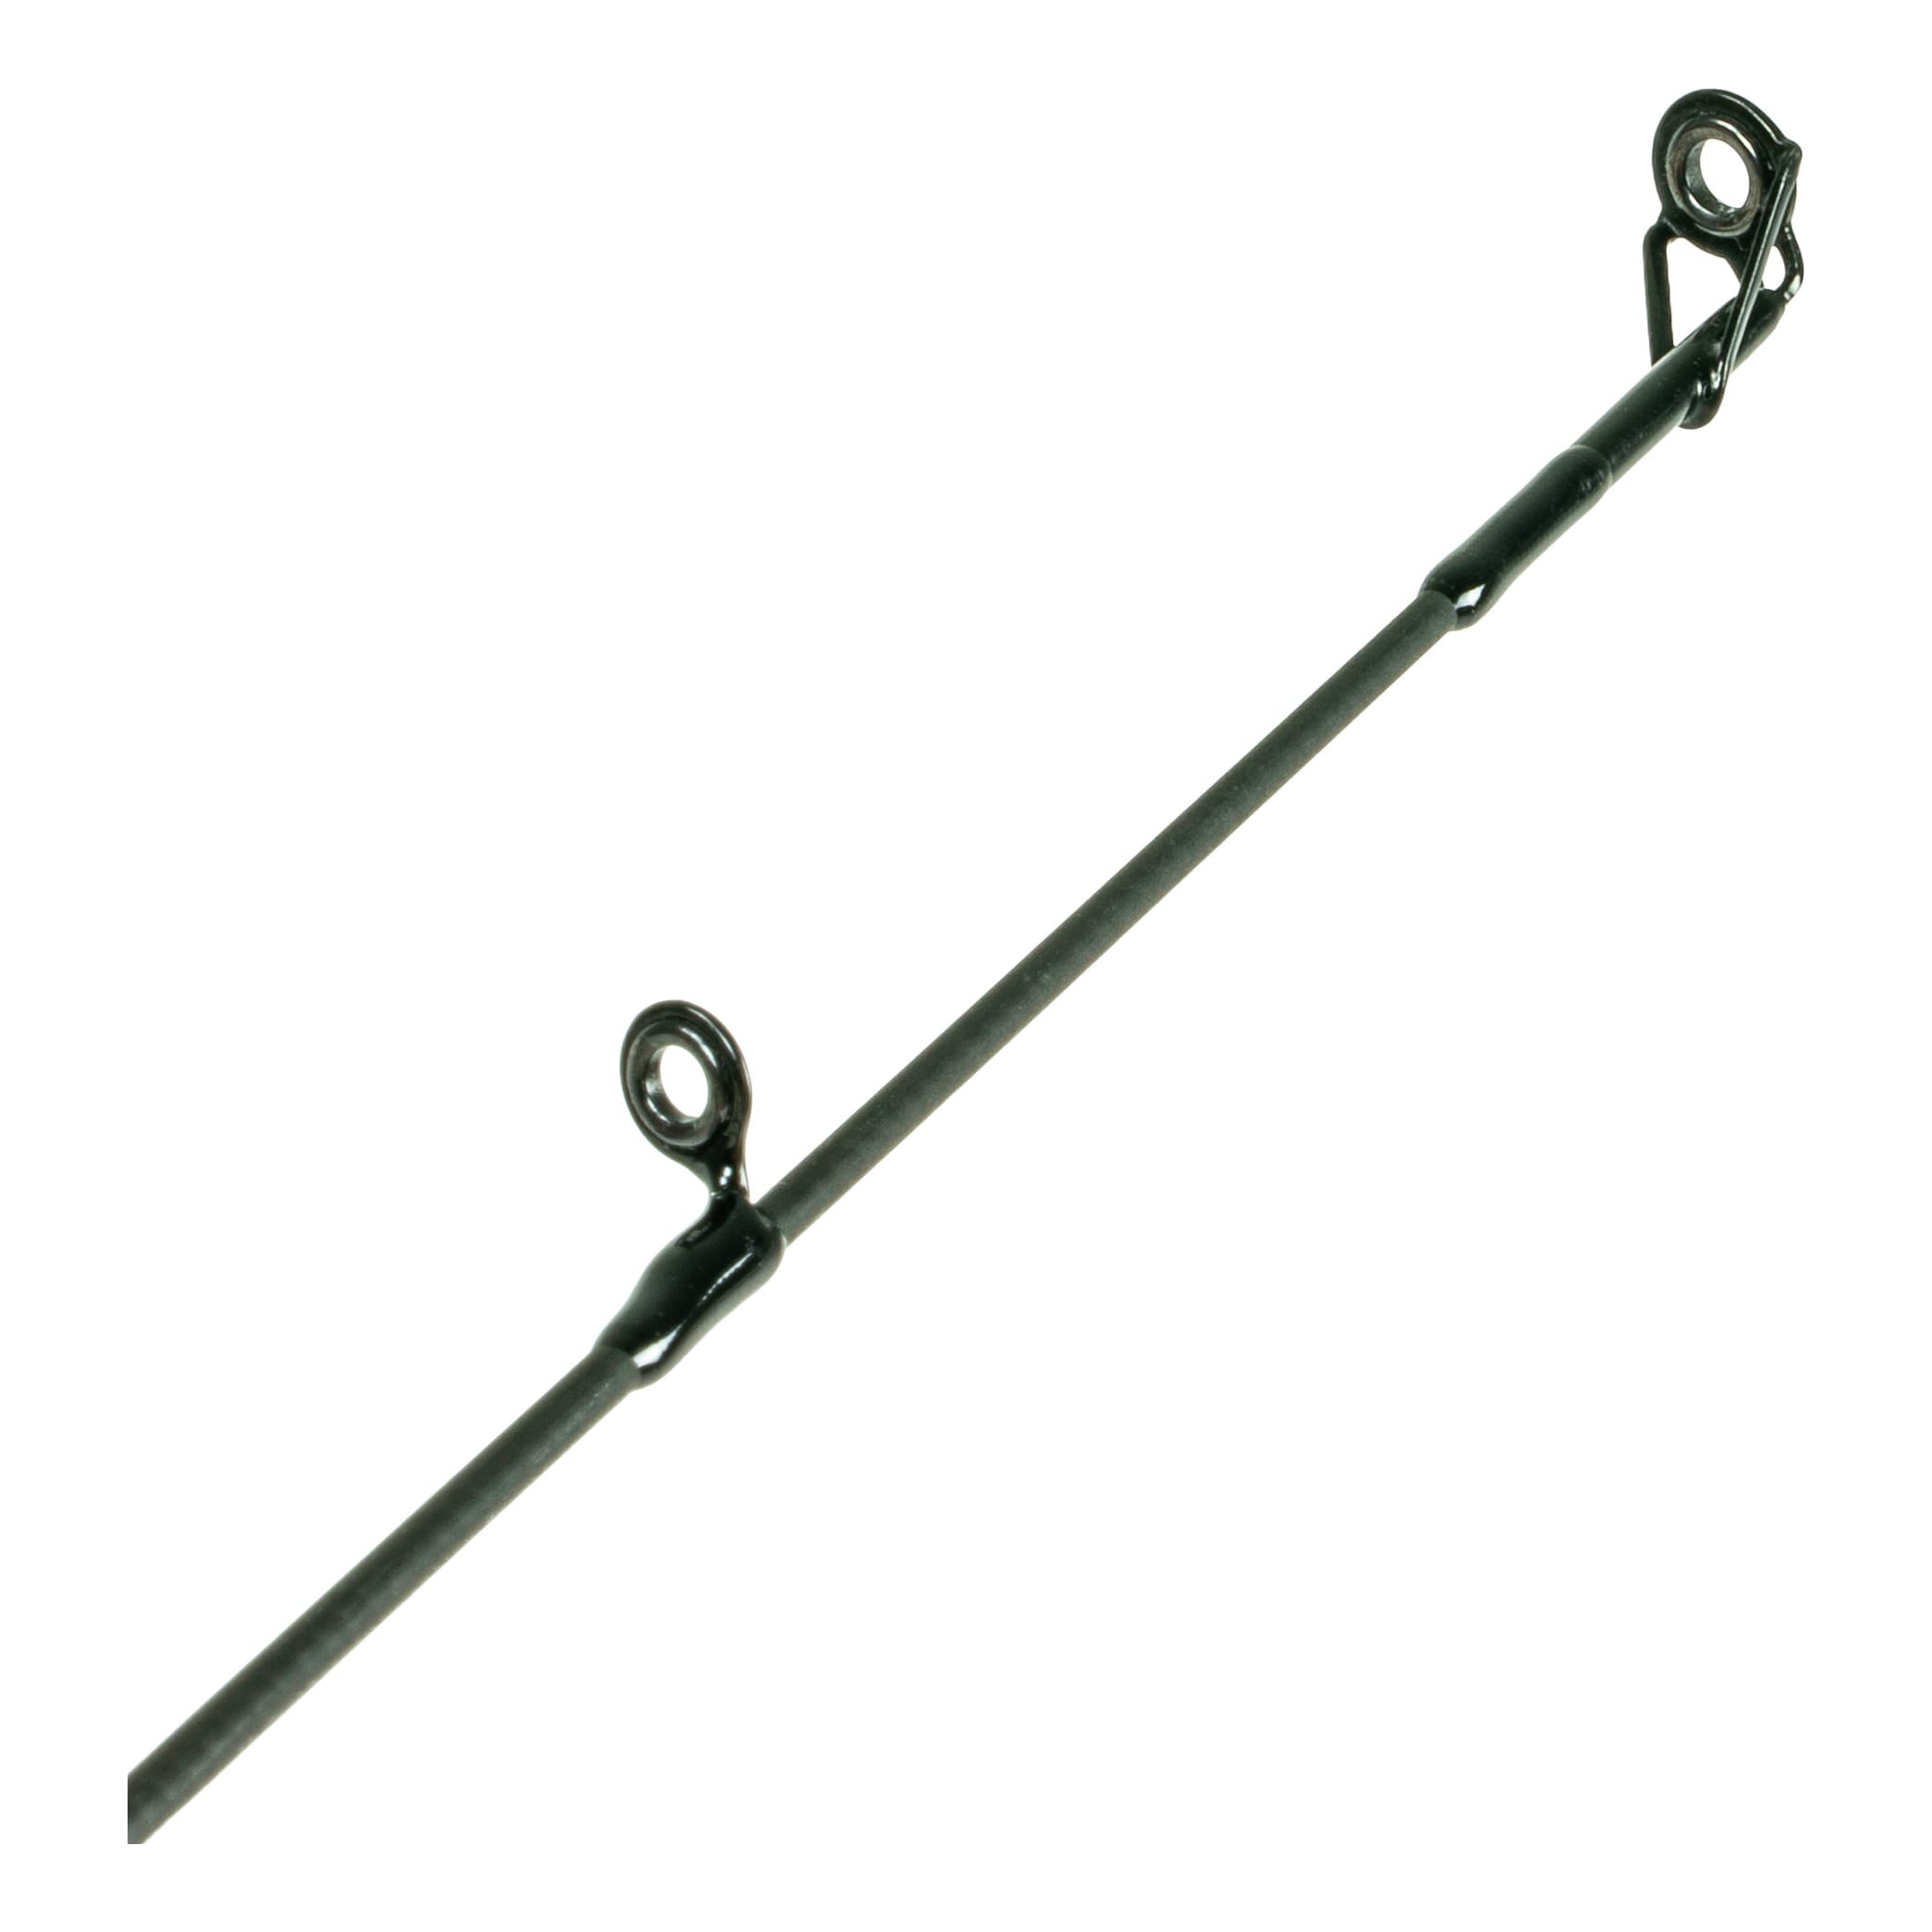 Shimano® Clarus Casting Rod